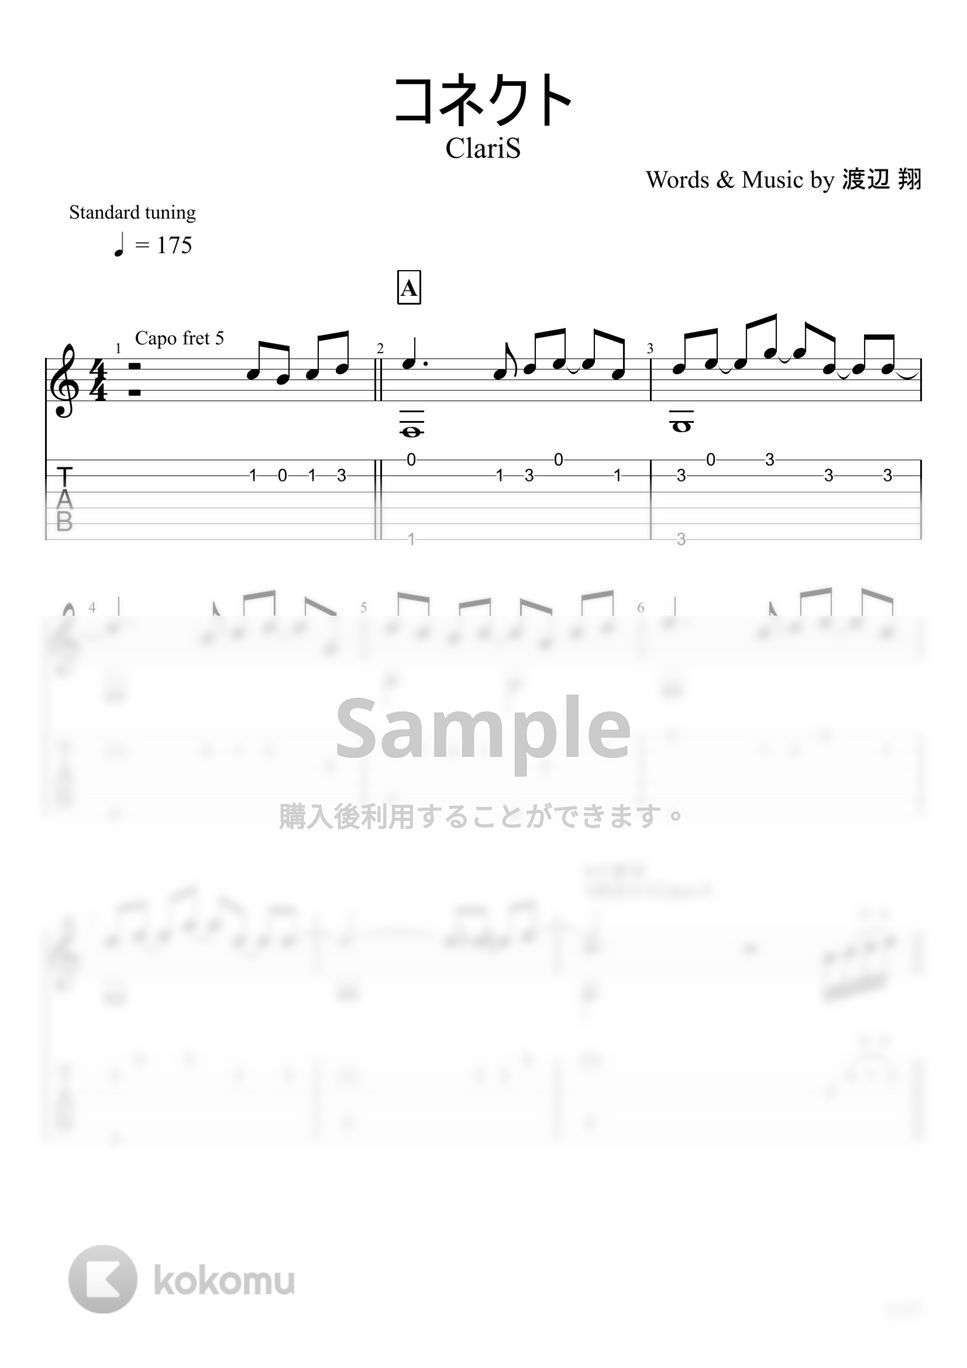 ClariS - コネクト (ソロギター) by u3danchou